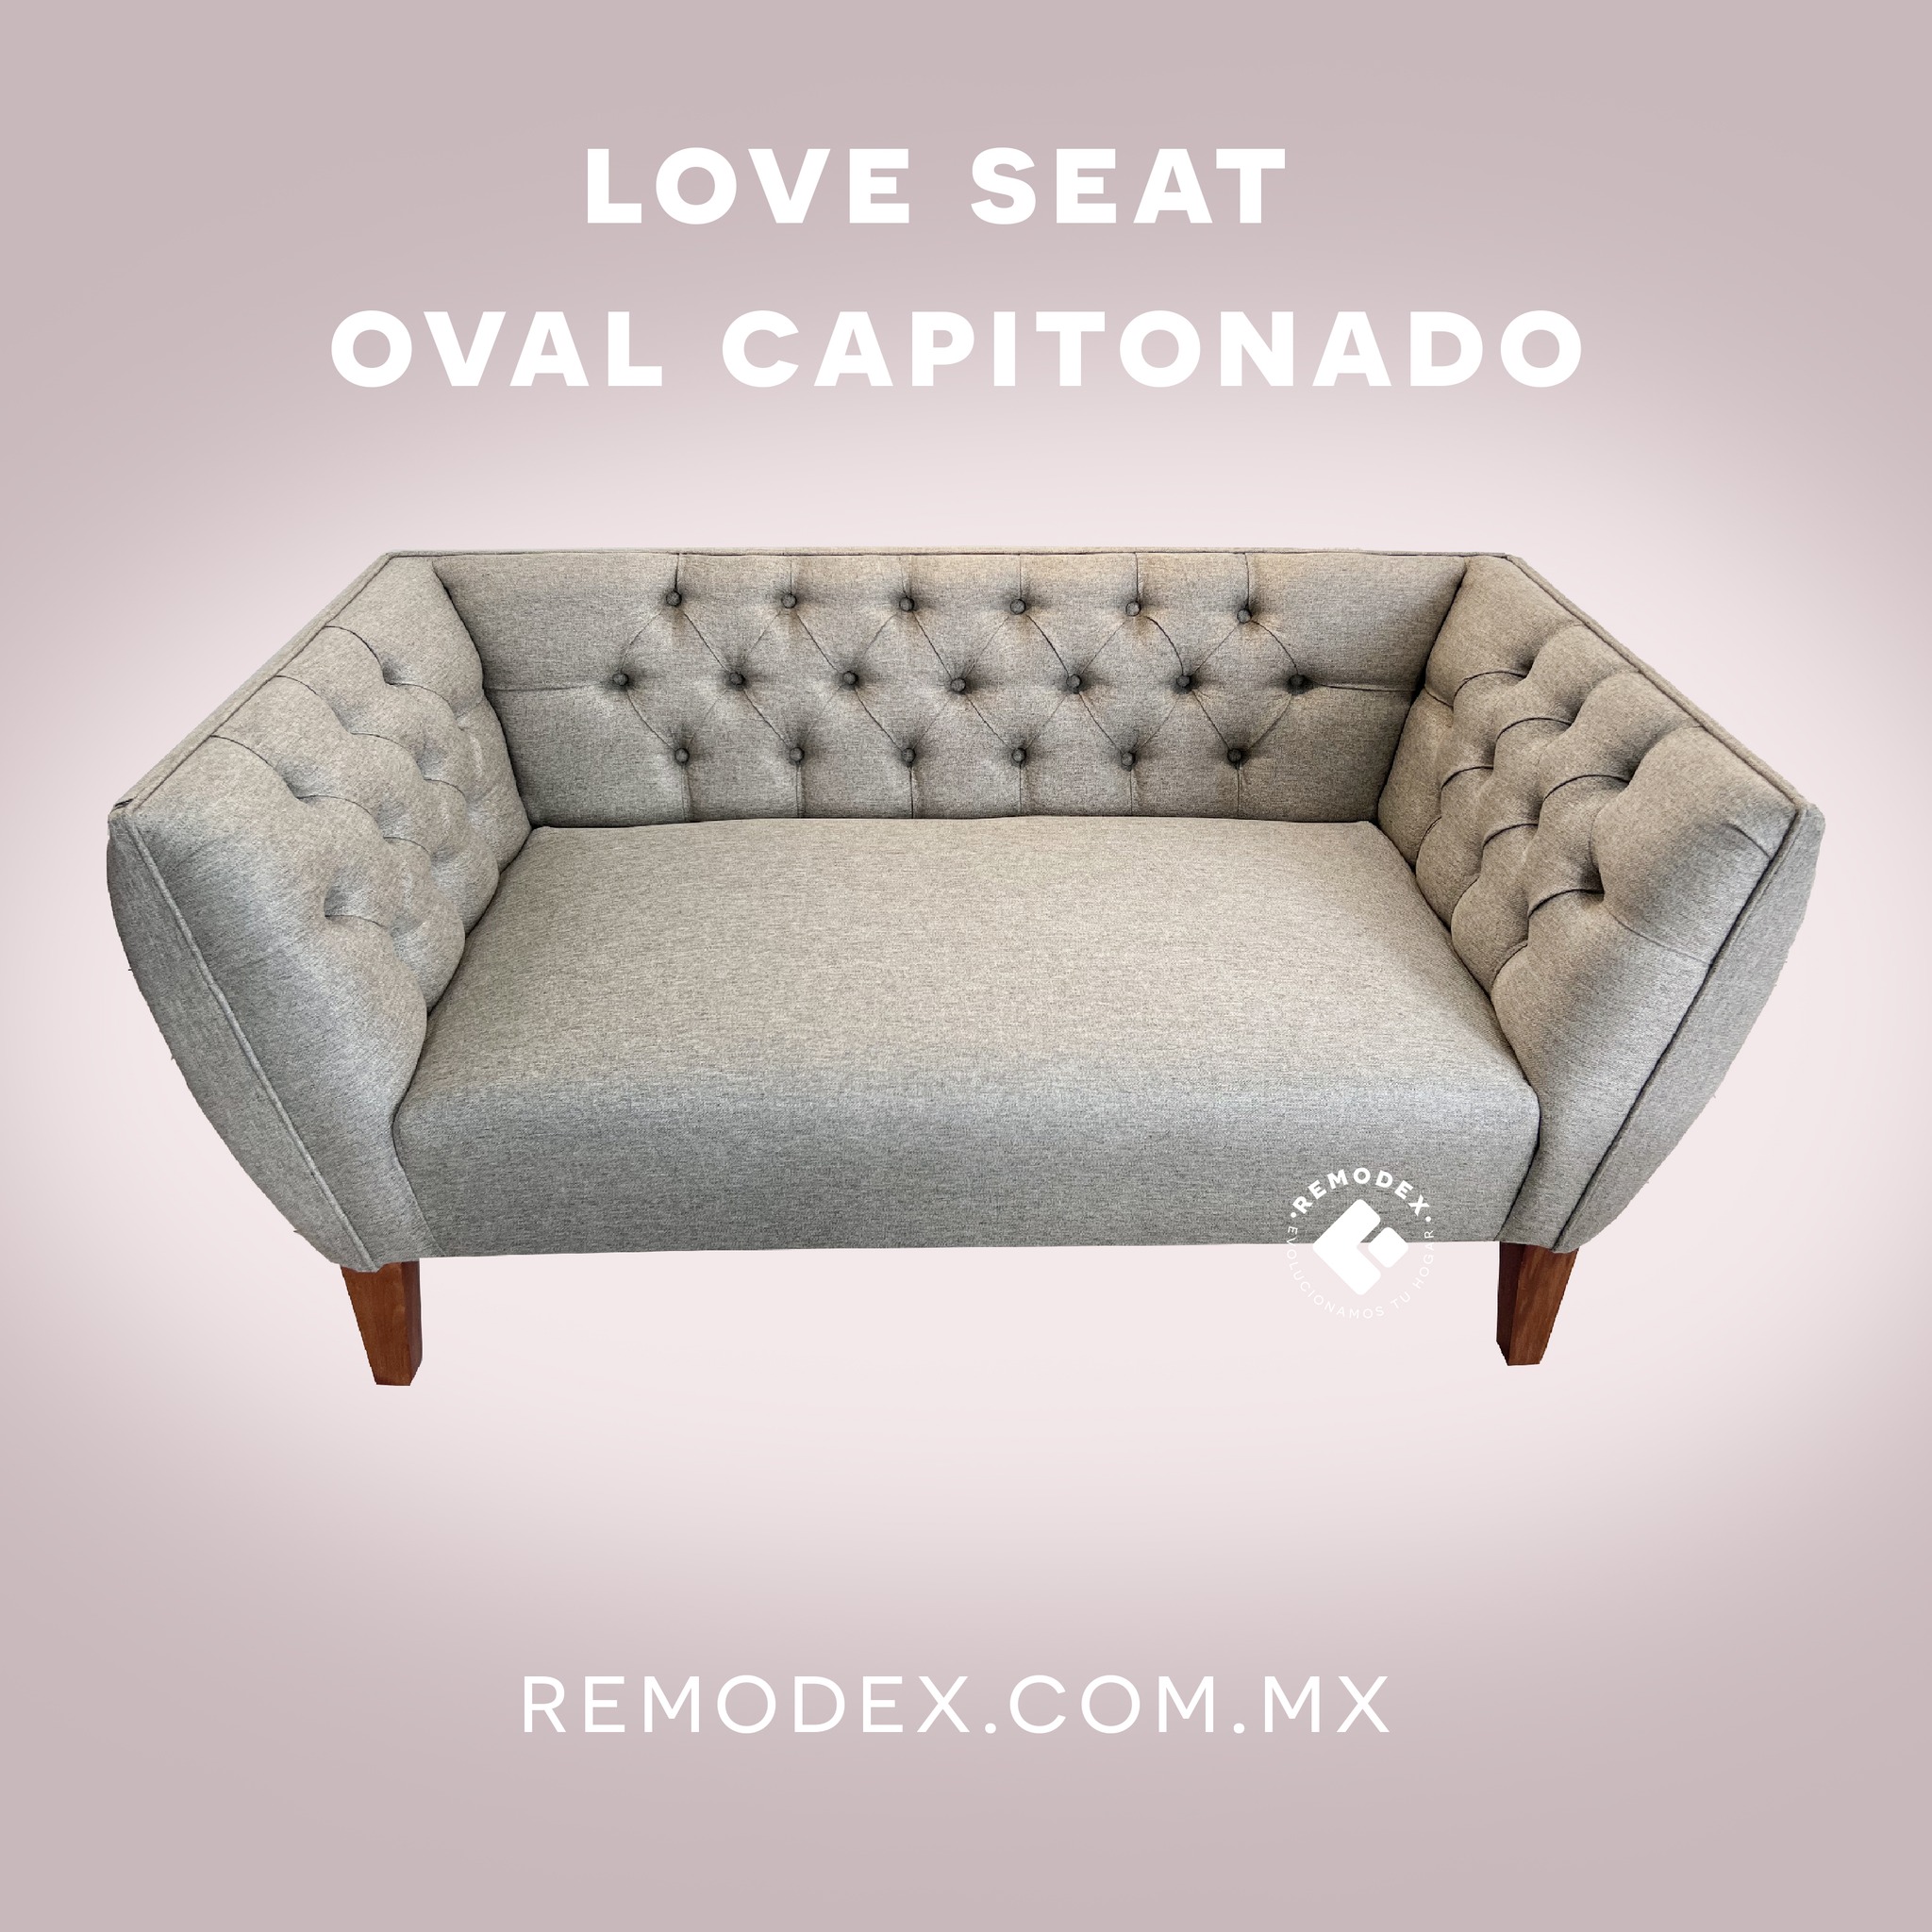 LOVE SEAT OVAL CAPITONADO